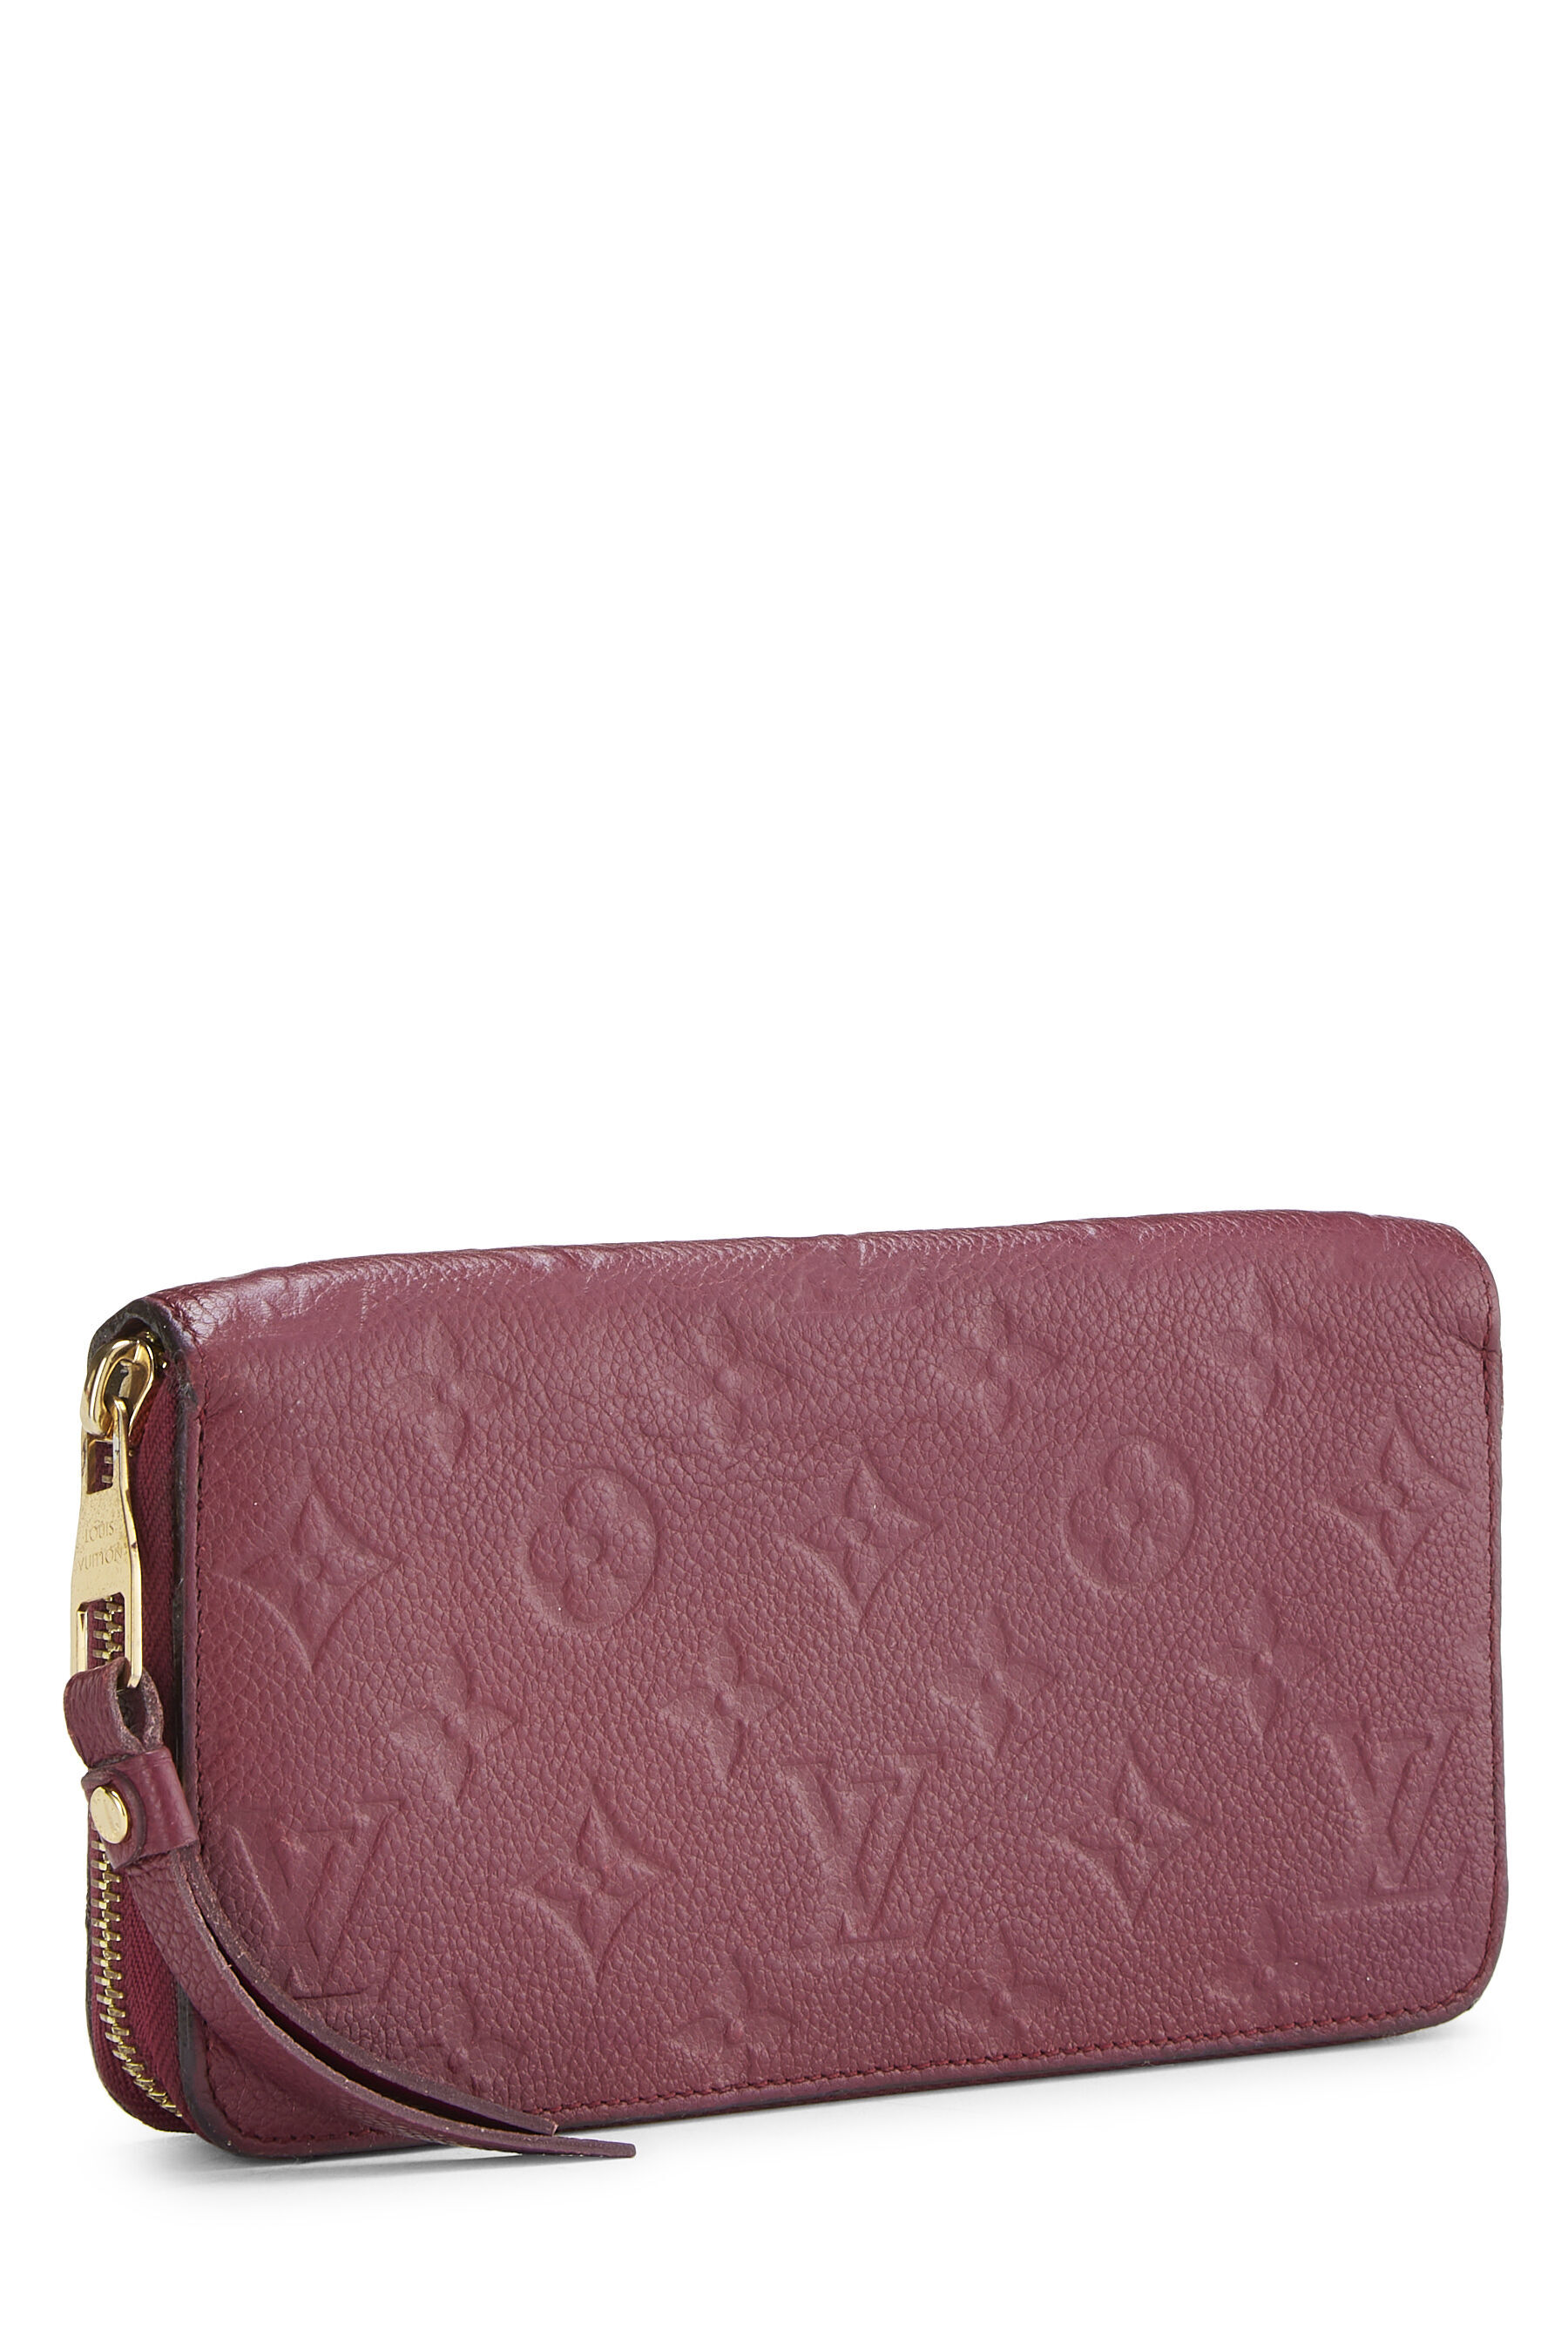 Shop Louis Vuitton Zippy Xl Wallet (PORTEFEUILLE ZIPPY XL, M61698) by  Mikrie | BUYMA